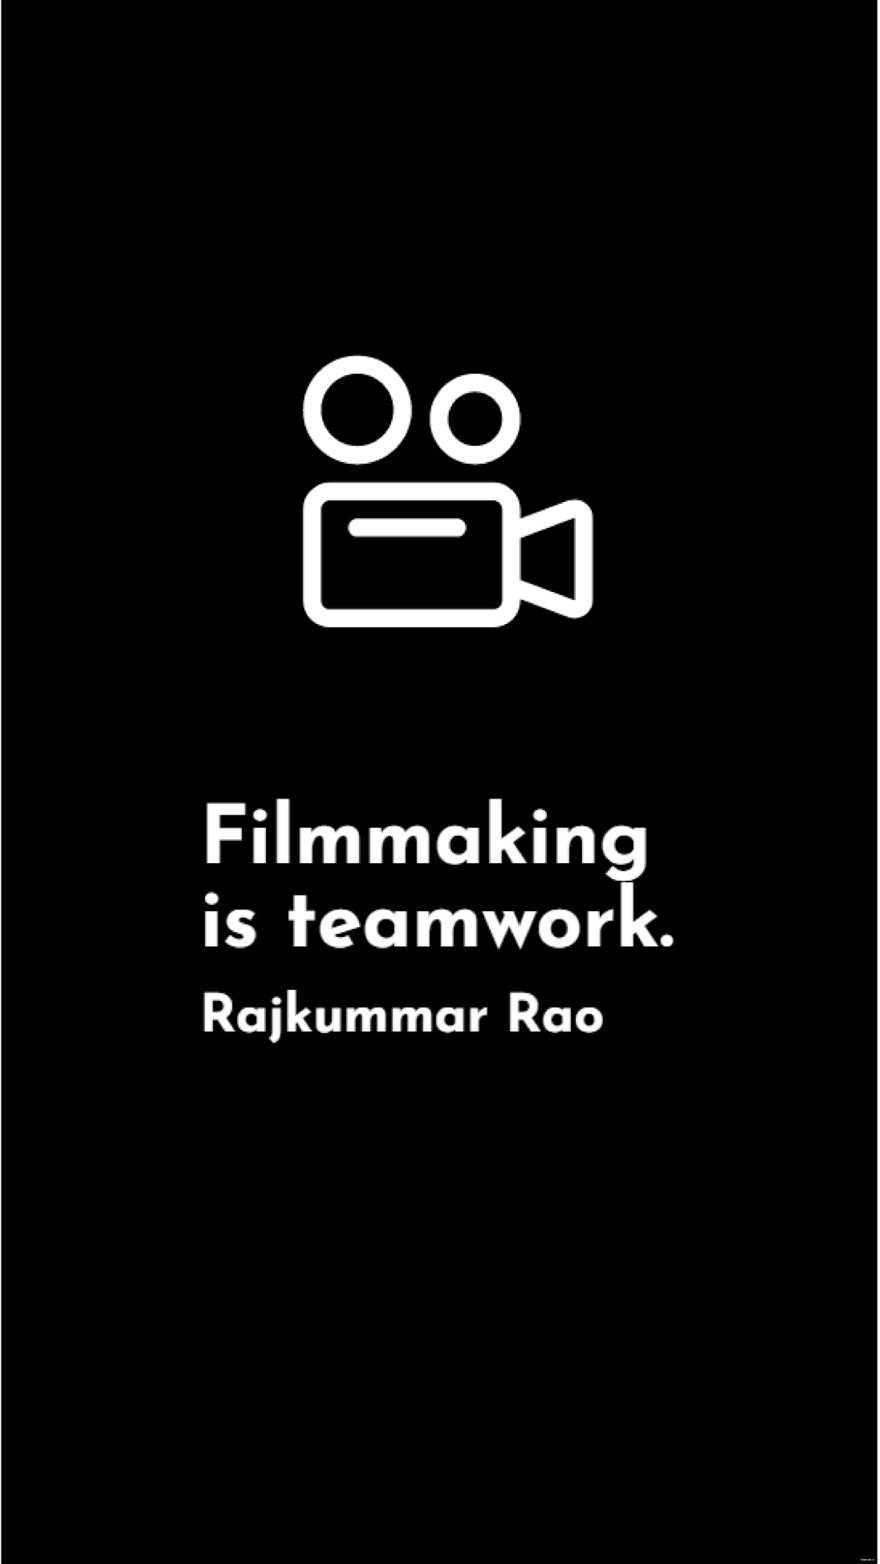 Free Rajkummar Rao - Filmmaking is teamwork. in JPG